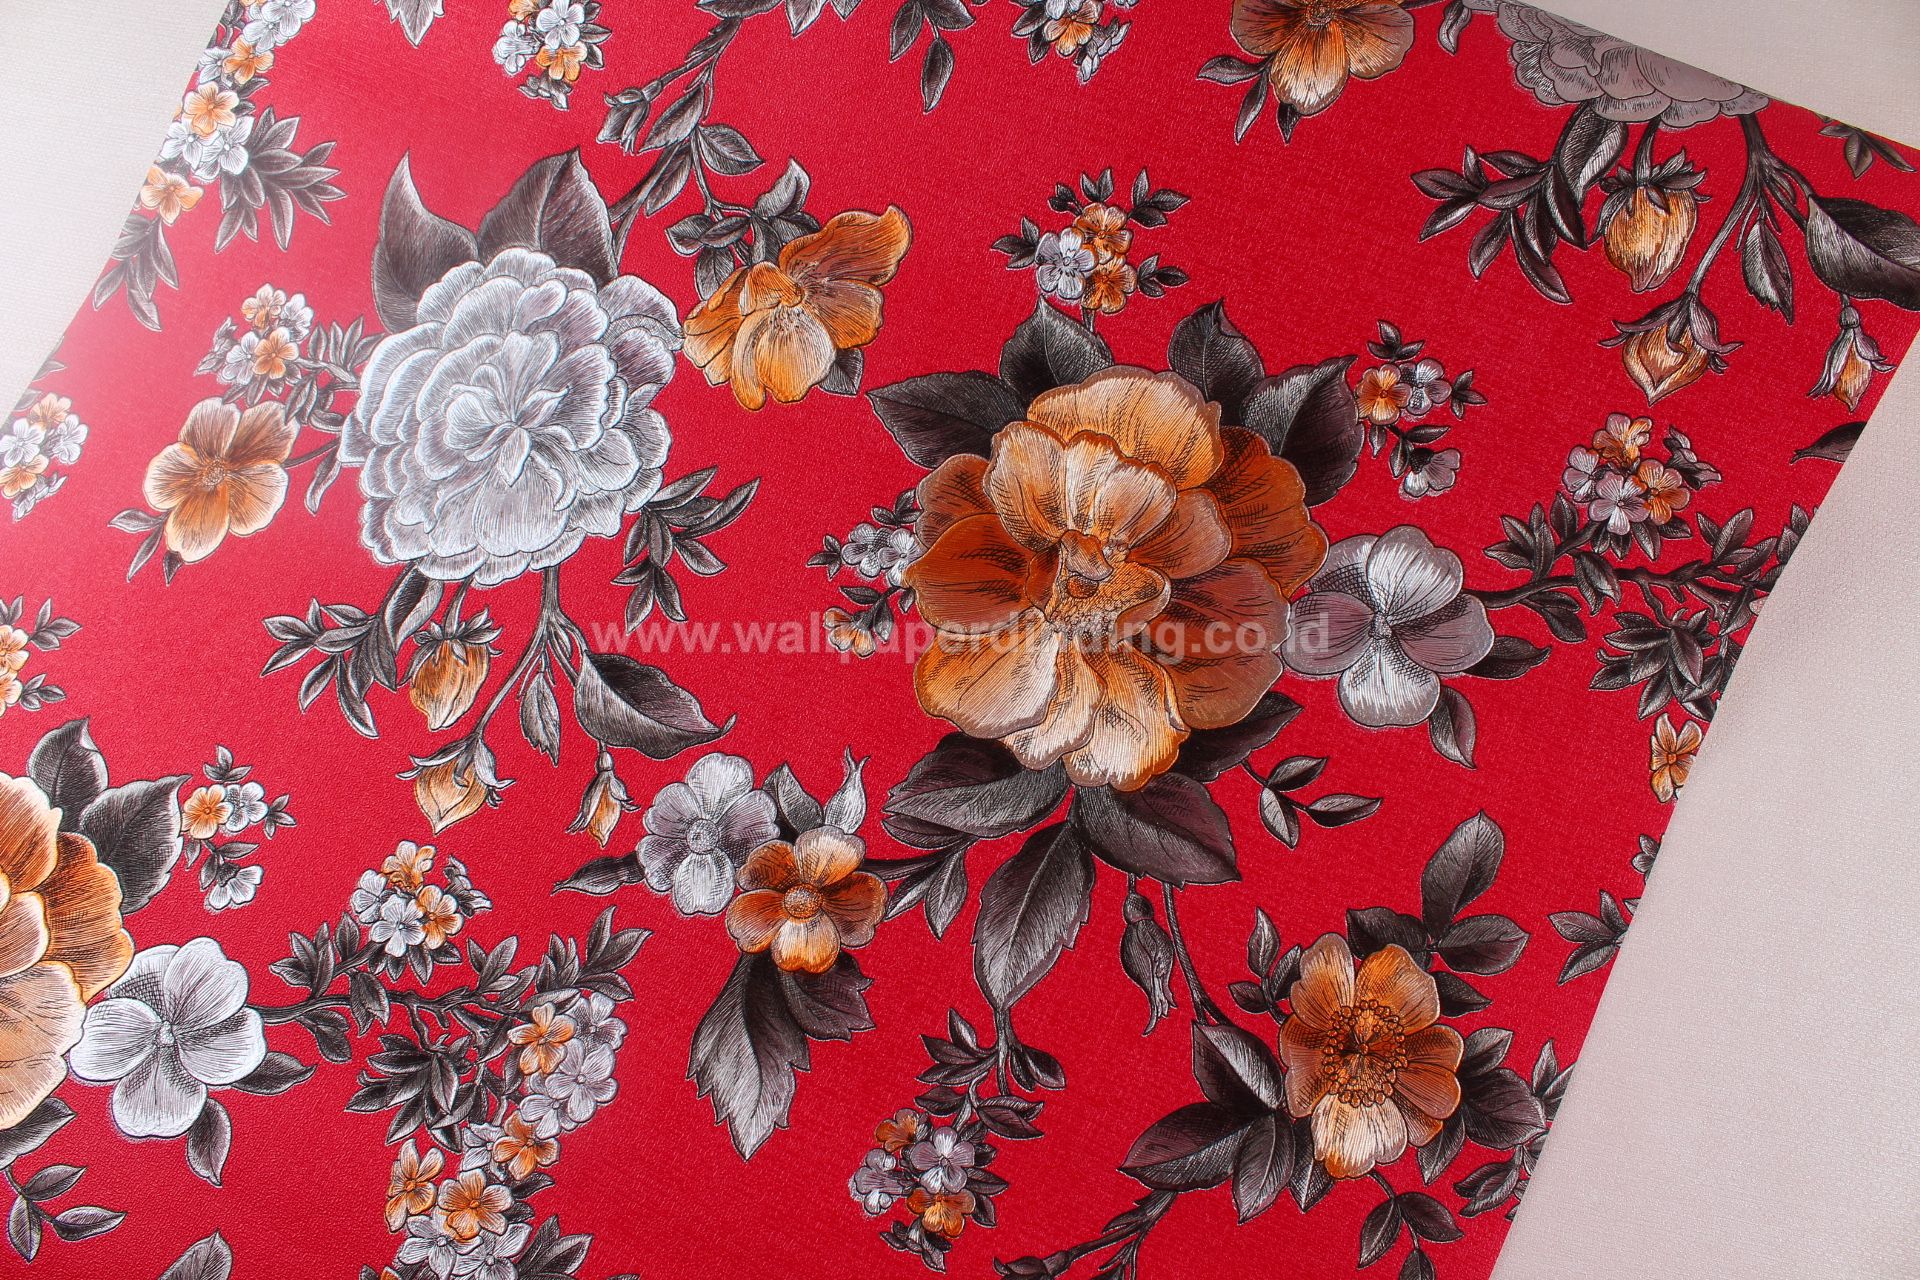 Wallpaper Dinding Bunga Merah Silver Orange Lrz 400 82